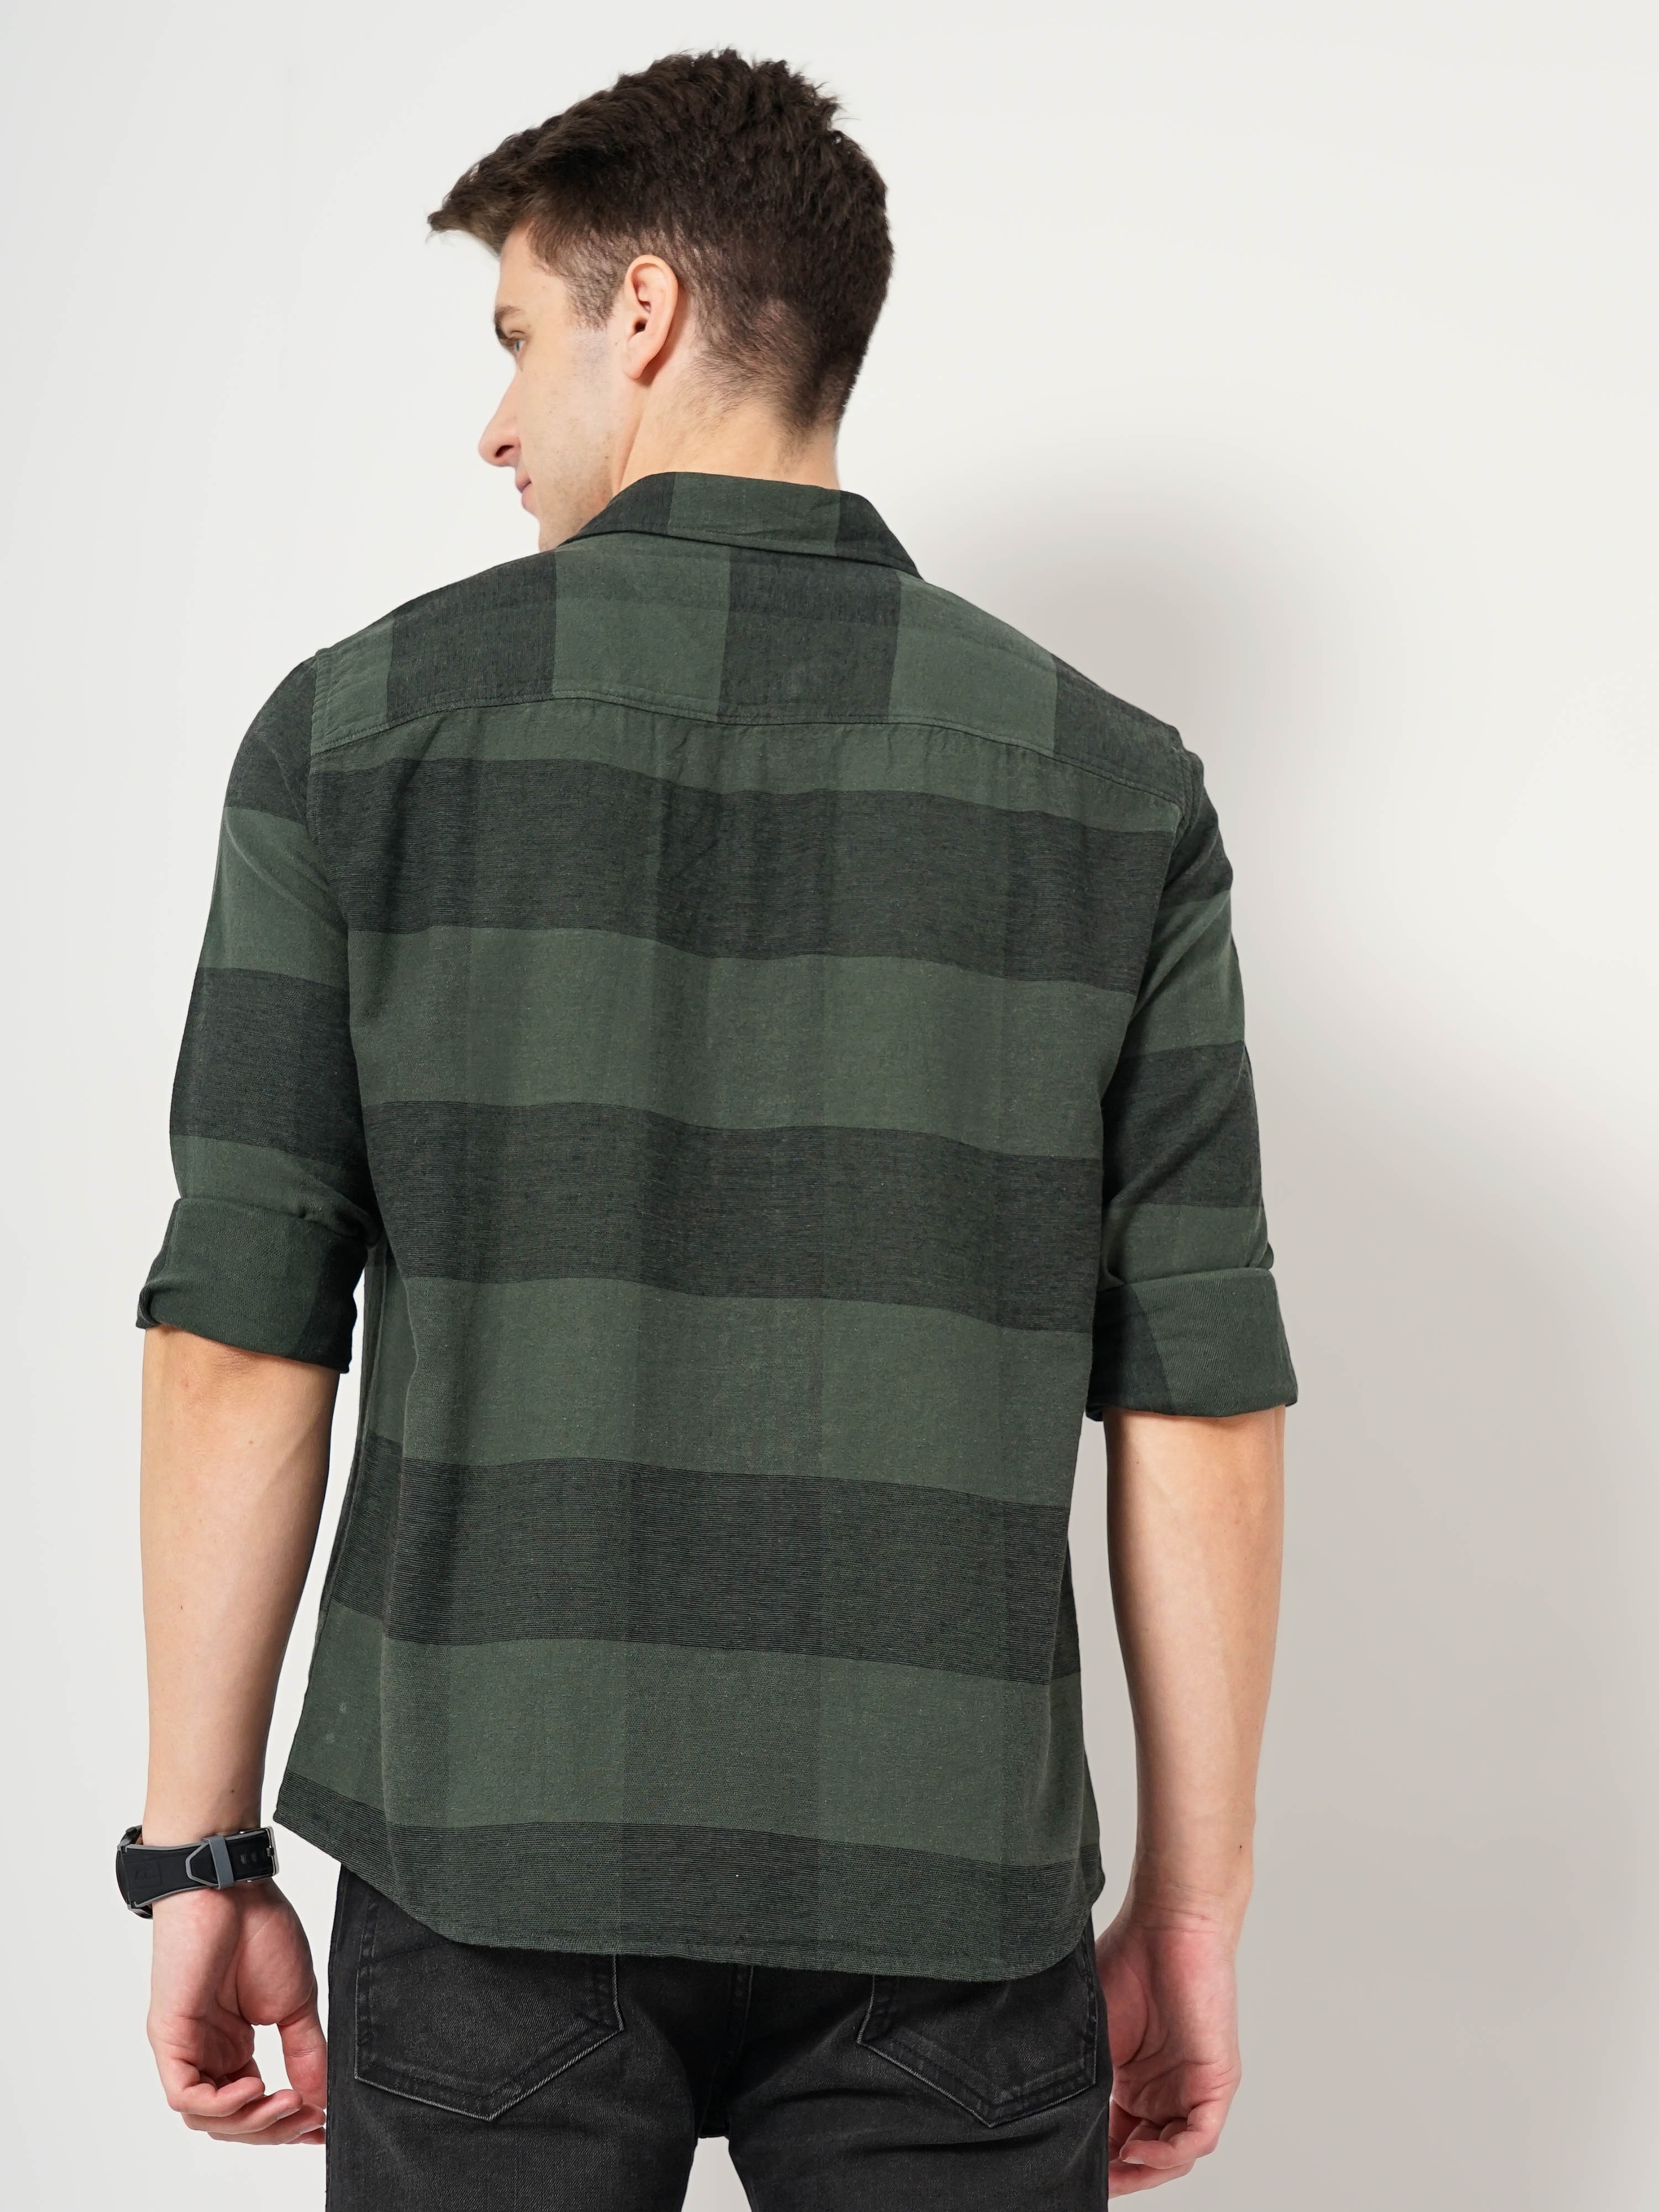 Men's Green Checked Casual Shirts